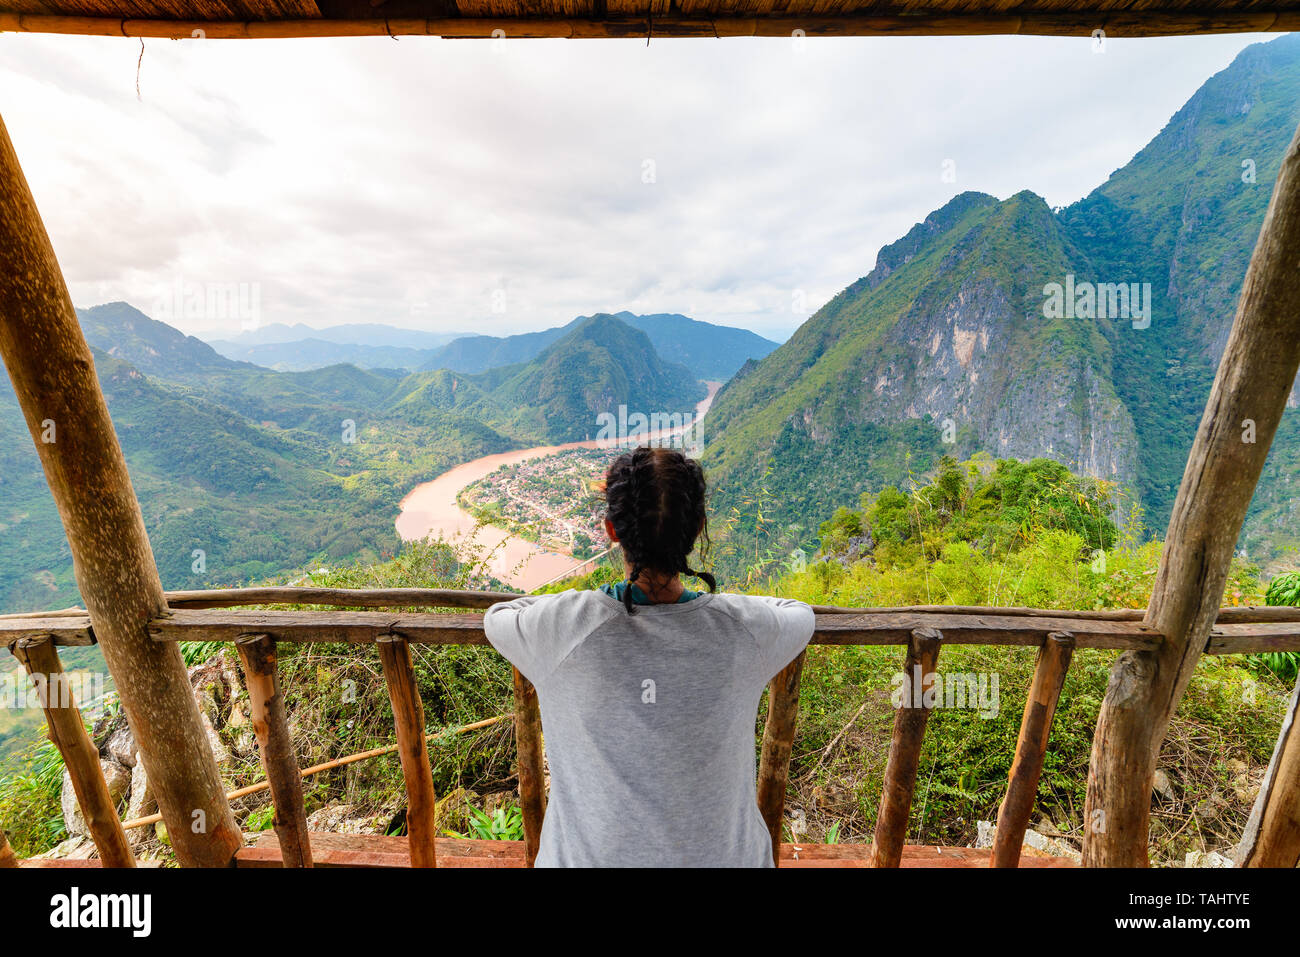 Frau auf Balkon aus Holz Eroberung Mountain Top in Nong Khiaw Nam Ou Fluss Tal Laos reife Menschen reisen millenials Konzept Reiseziel i Stockfoto